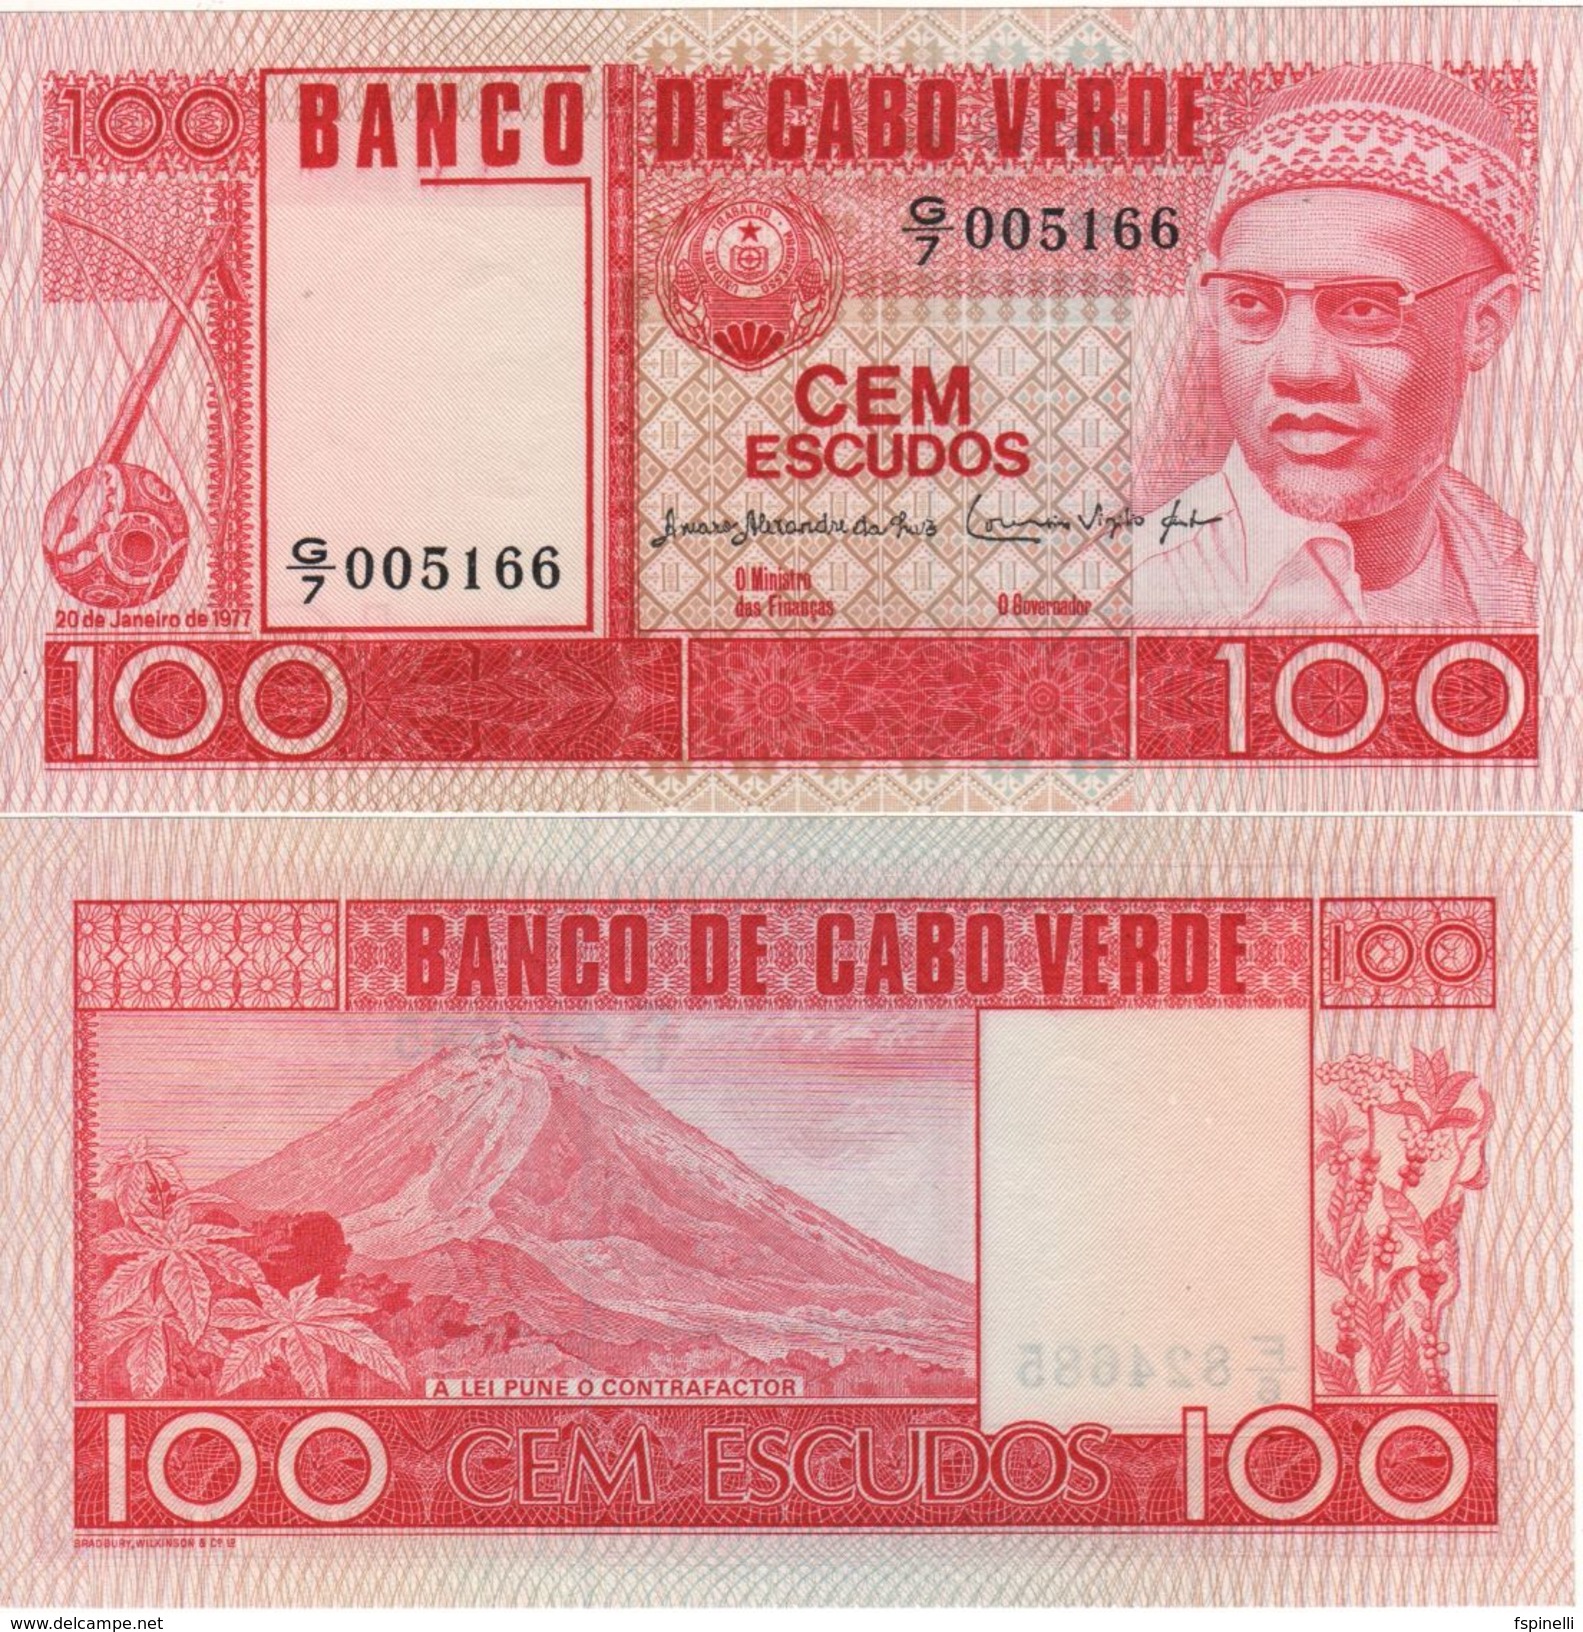 CAPE VERDE   100 Escudos     P54a   Dated 20.1.1977  UNC - Cap Verde